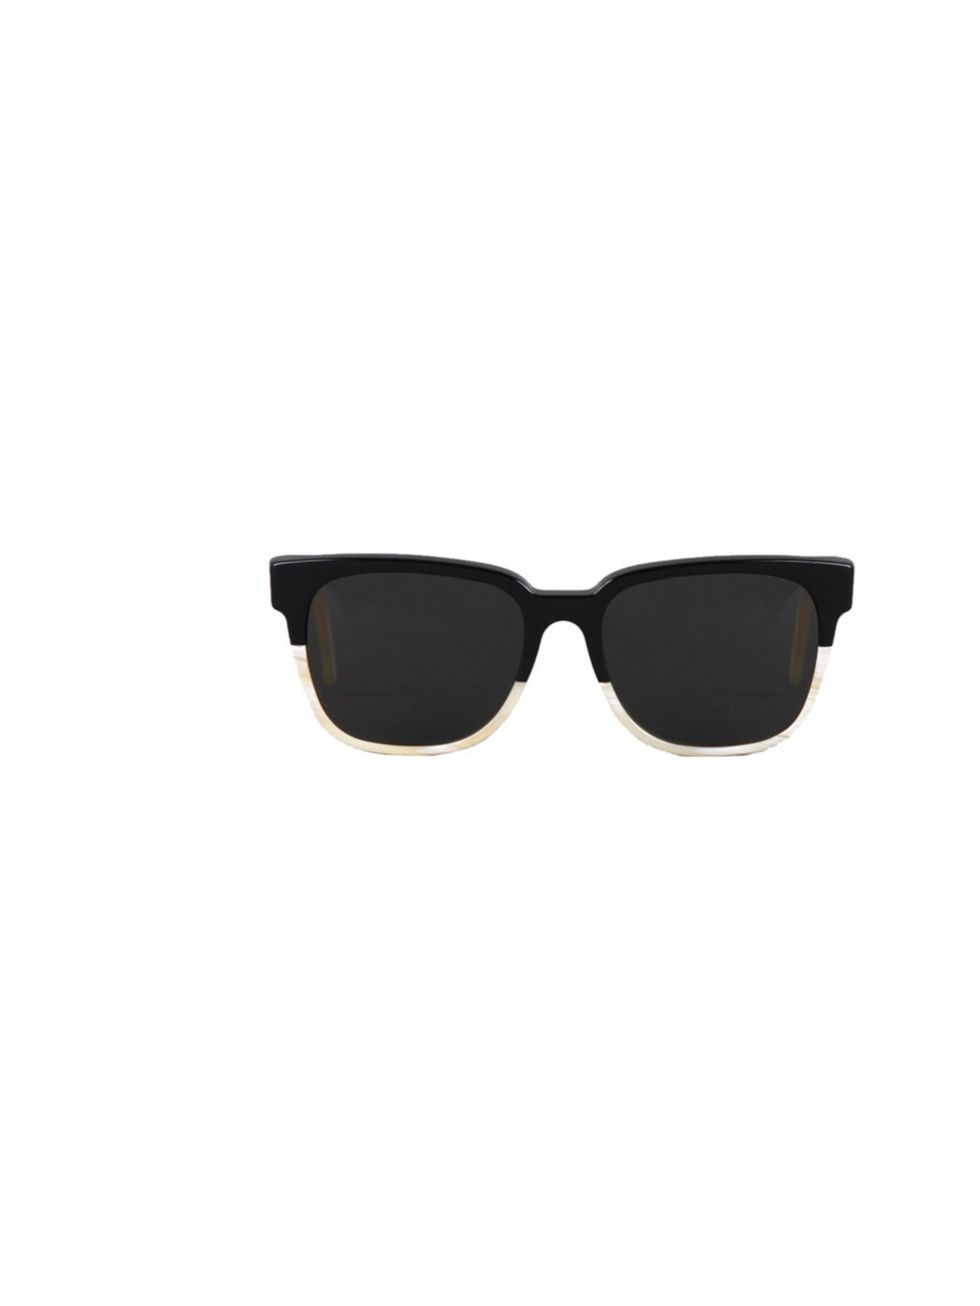 <p>RetroSuperFuture 'People' monochrome sunglasses, £139, at <a href="http://goodhoodstore.com/store/5923">Goodhood</a></p>